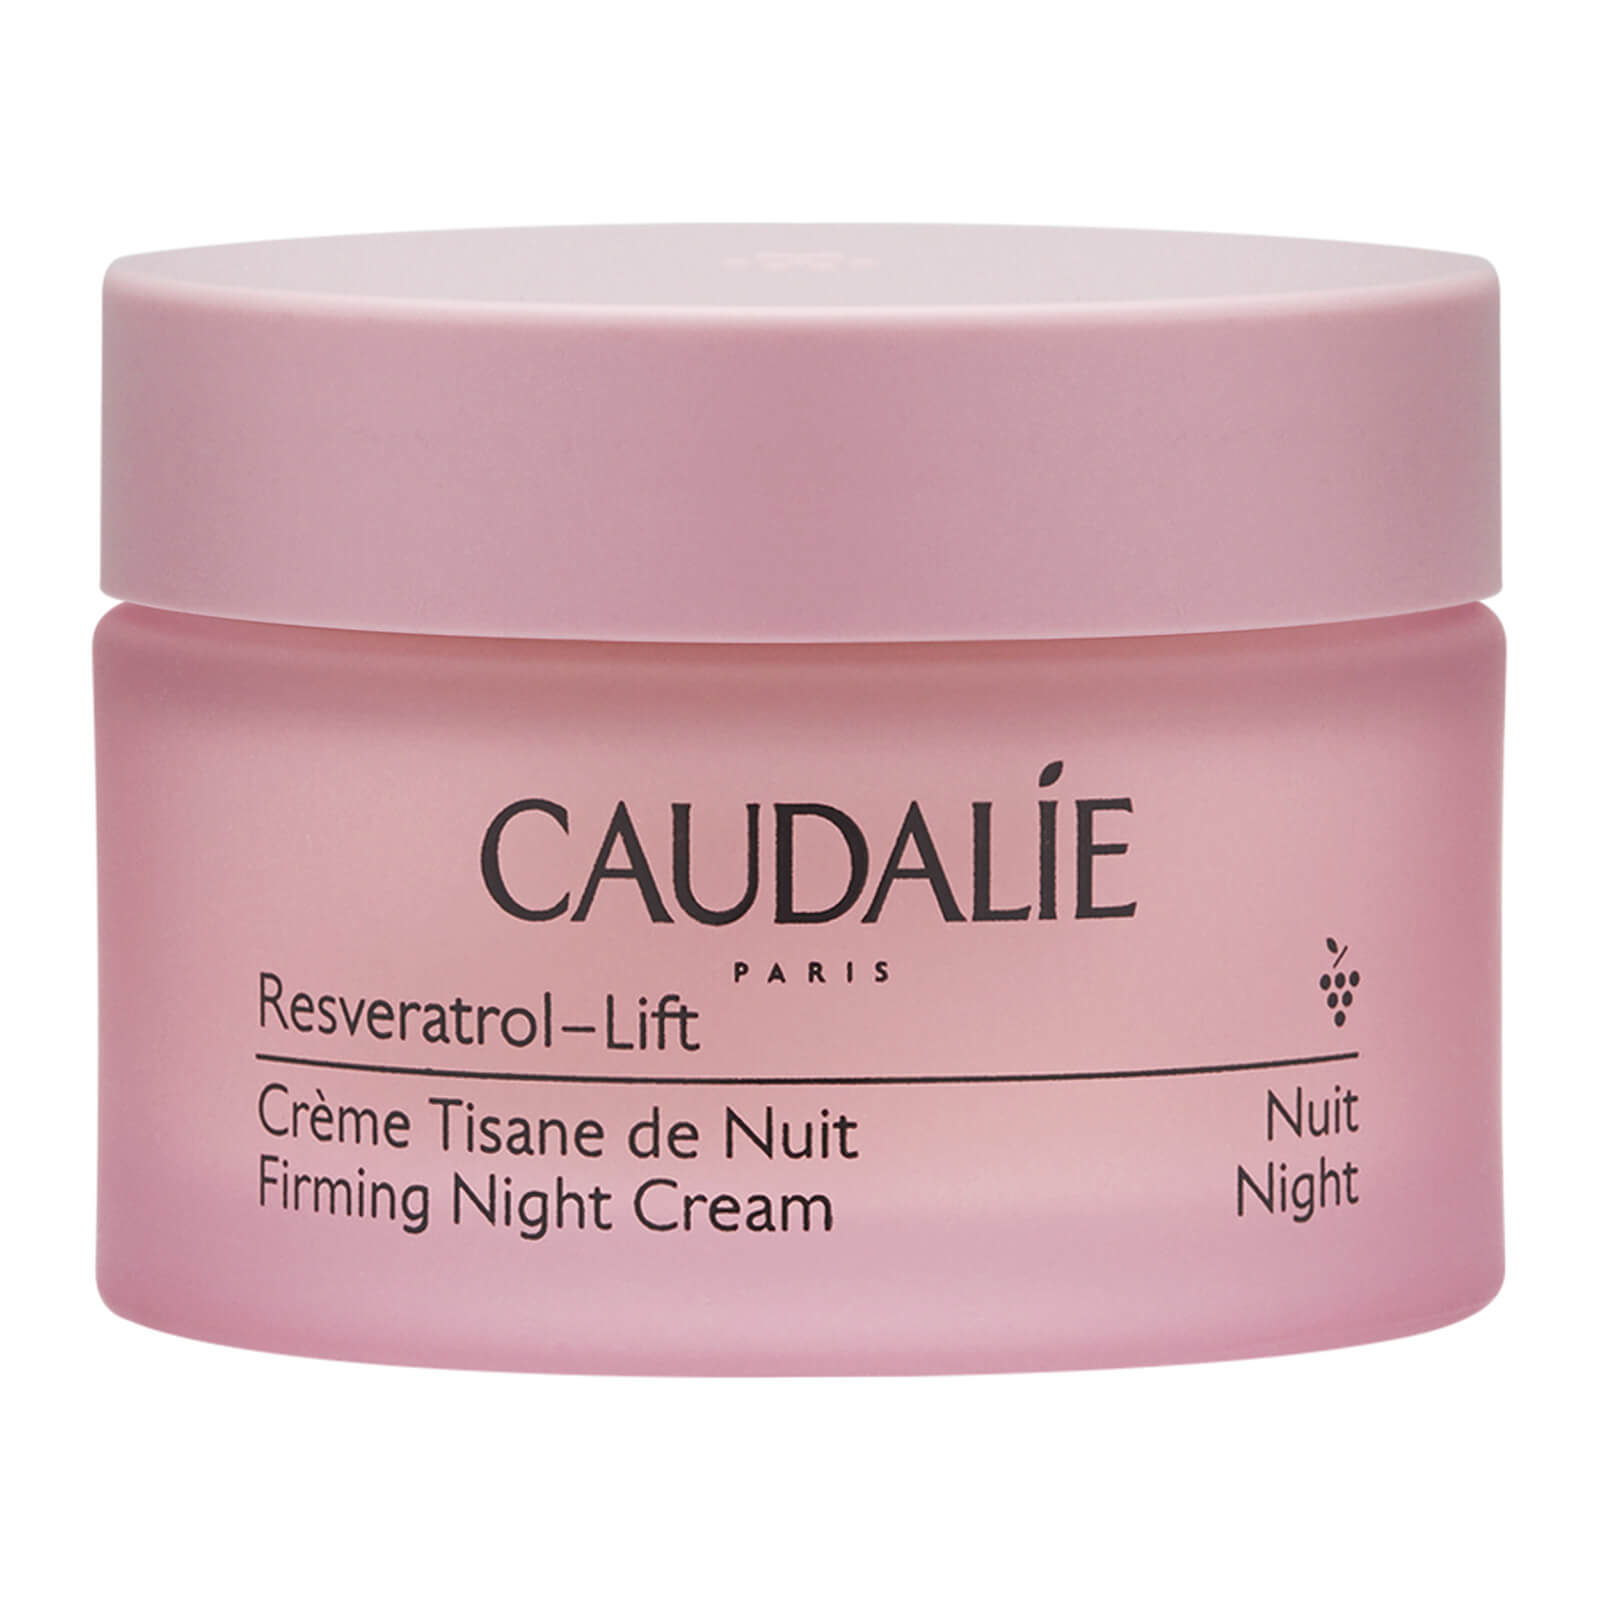 Resveratrol-Lift Firming Night Cream